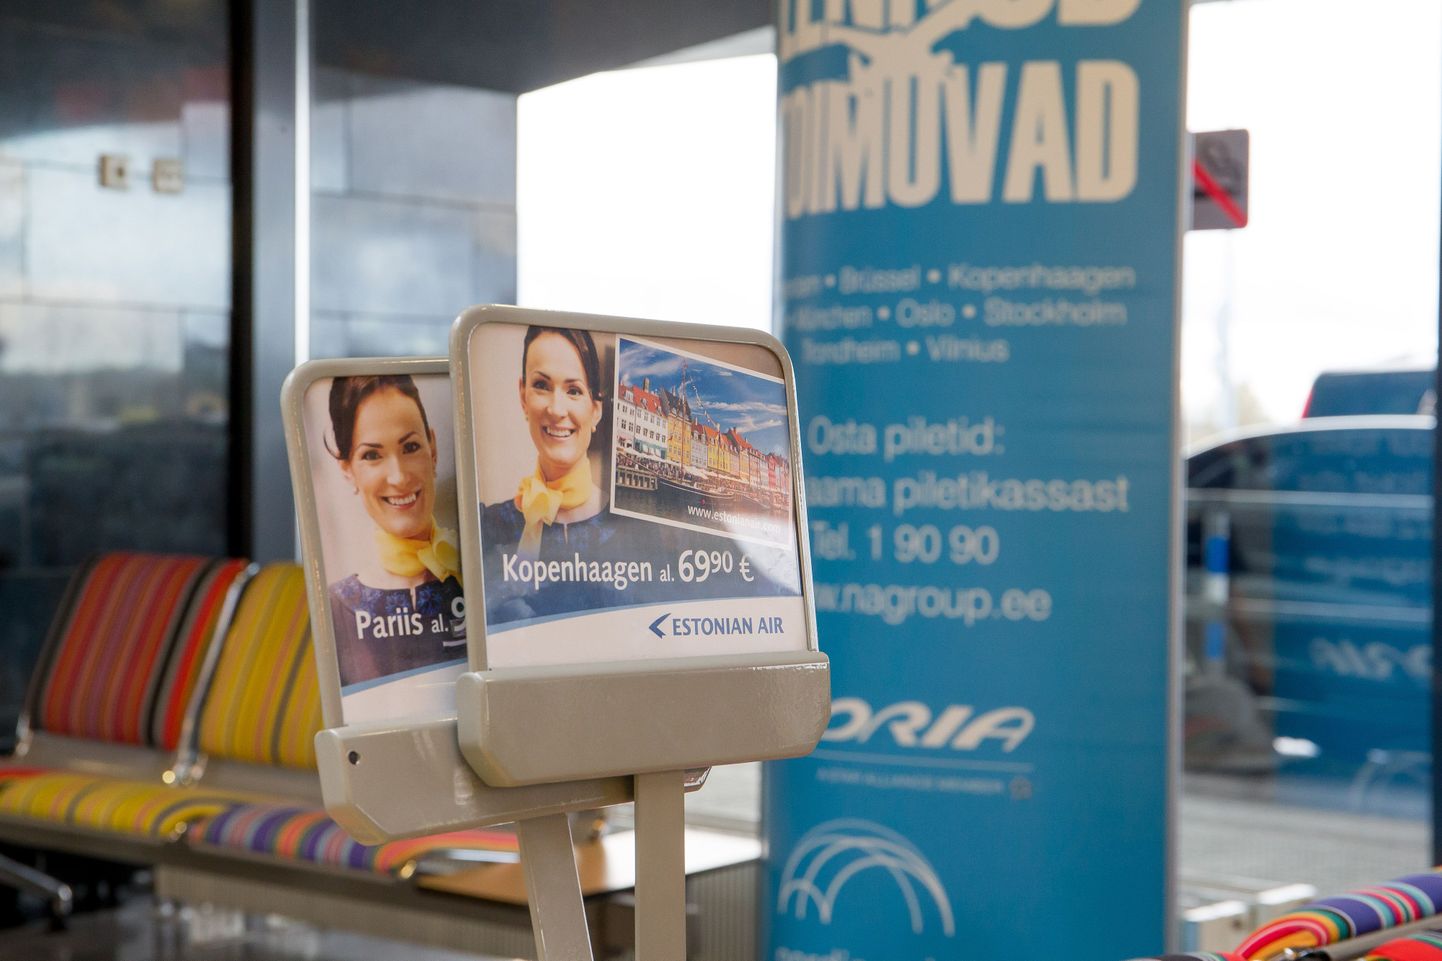 Estonian Airi reklaamid on Tallinna lennujaamas.